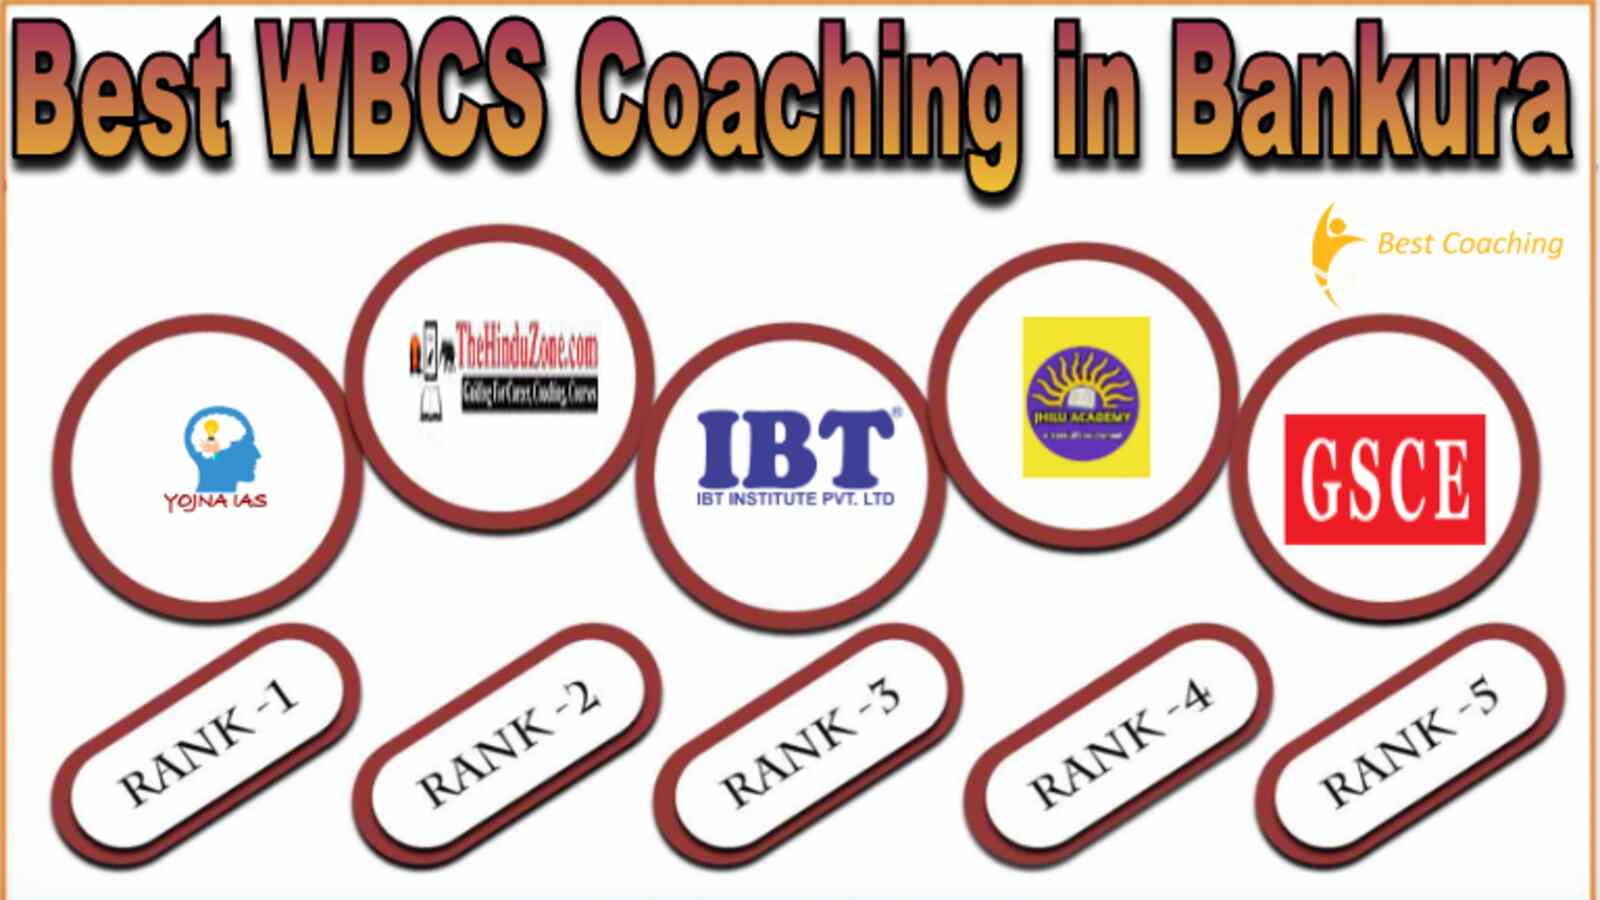 Best WBCS Coaching in Bankura